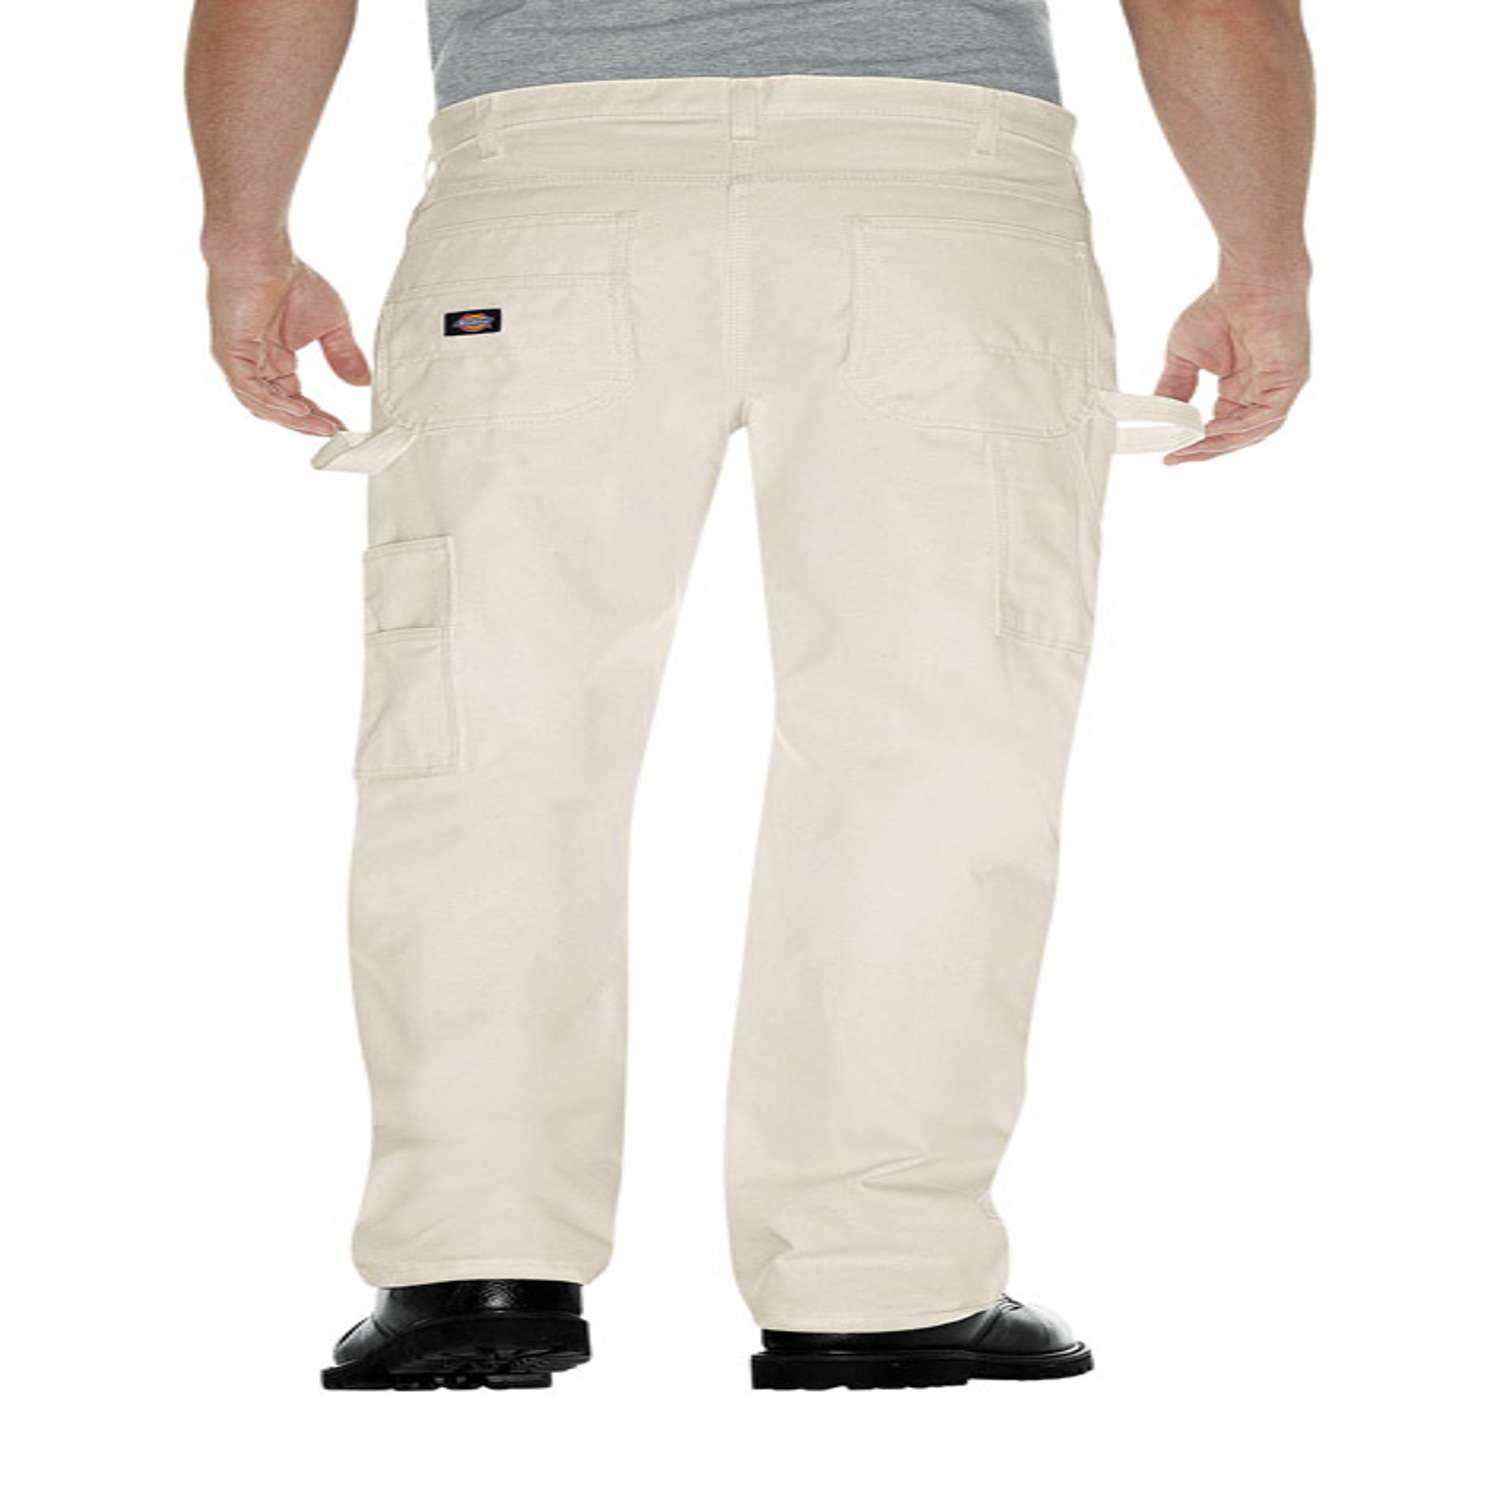 Men's Pants for sale in Dakota County, Minnesota